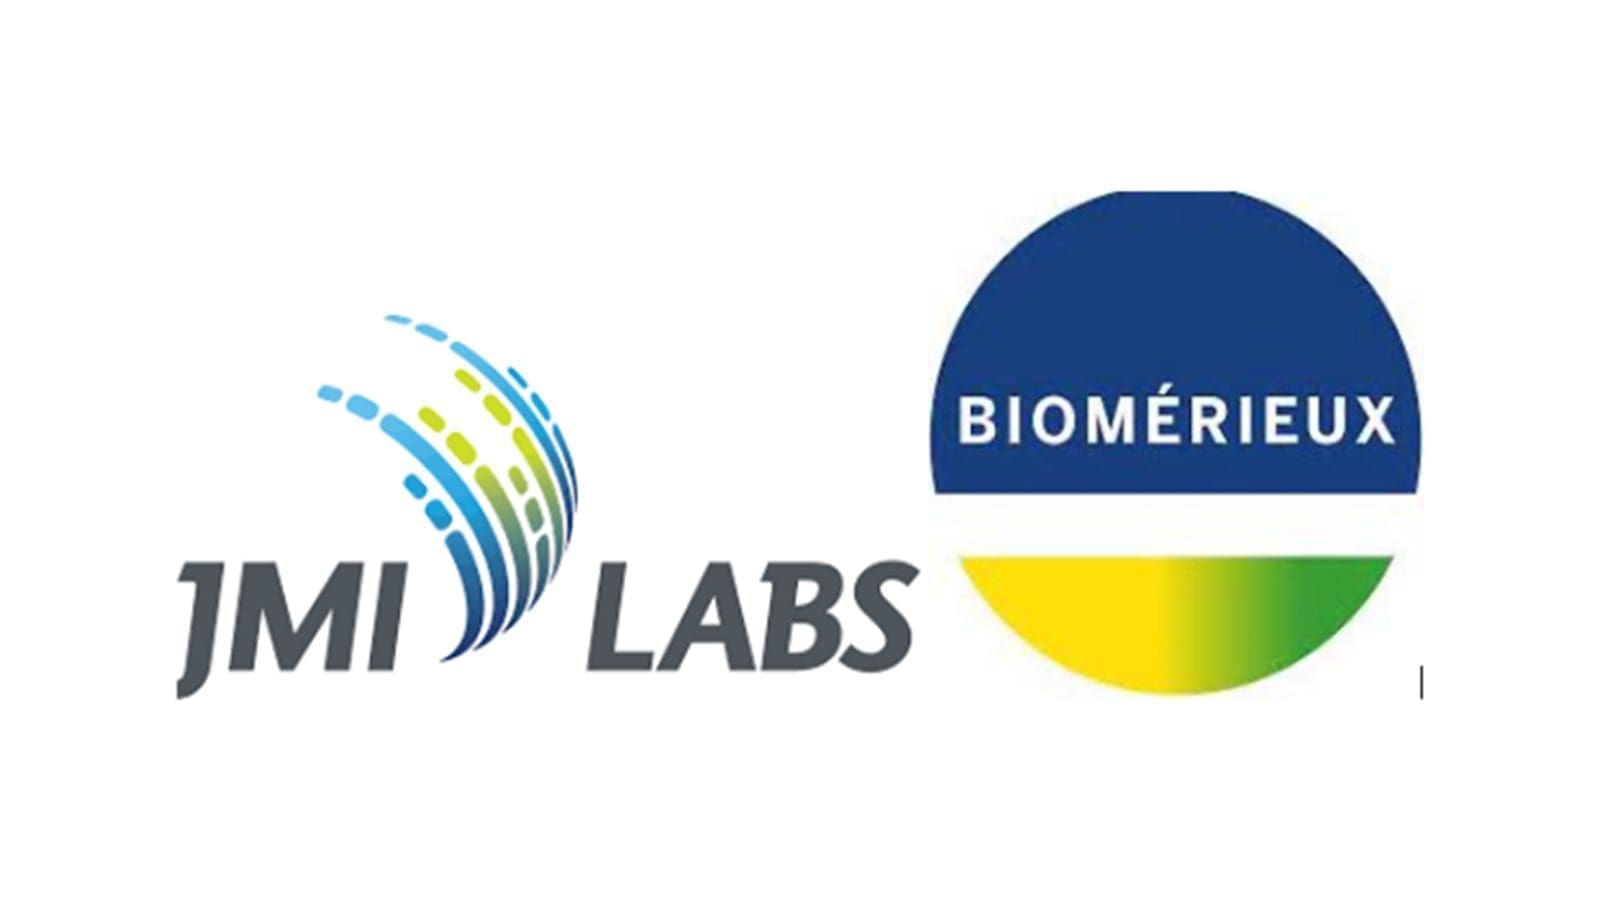 bioMérieux teams up with JMI Laboratories to battle against antimicrobial resistance